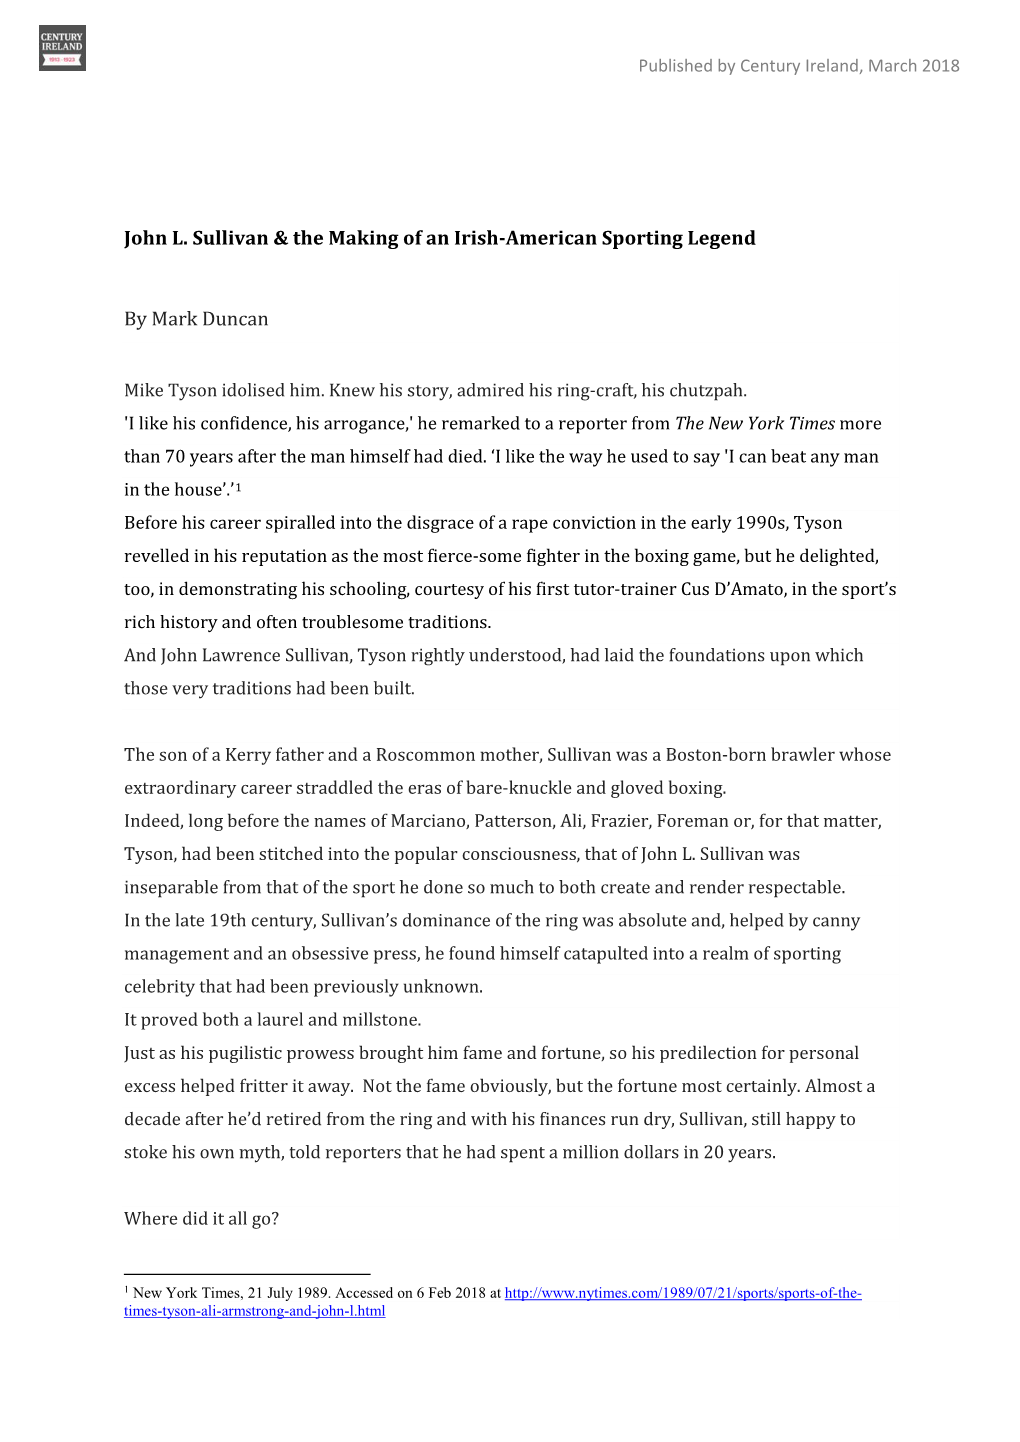 John L. Sullivan & the Making of an Irish-American Sporting Legend By